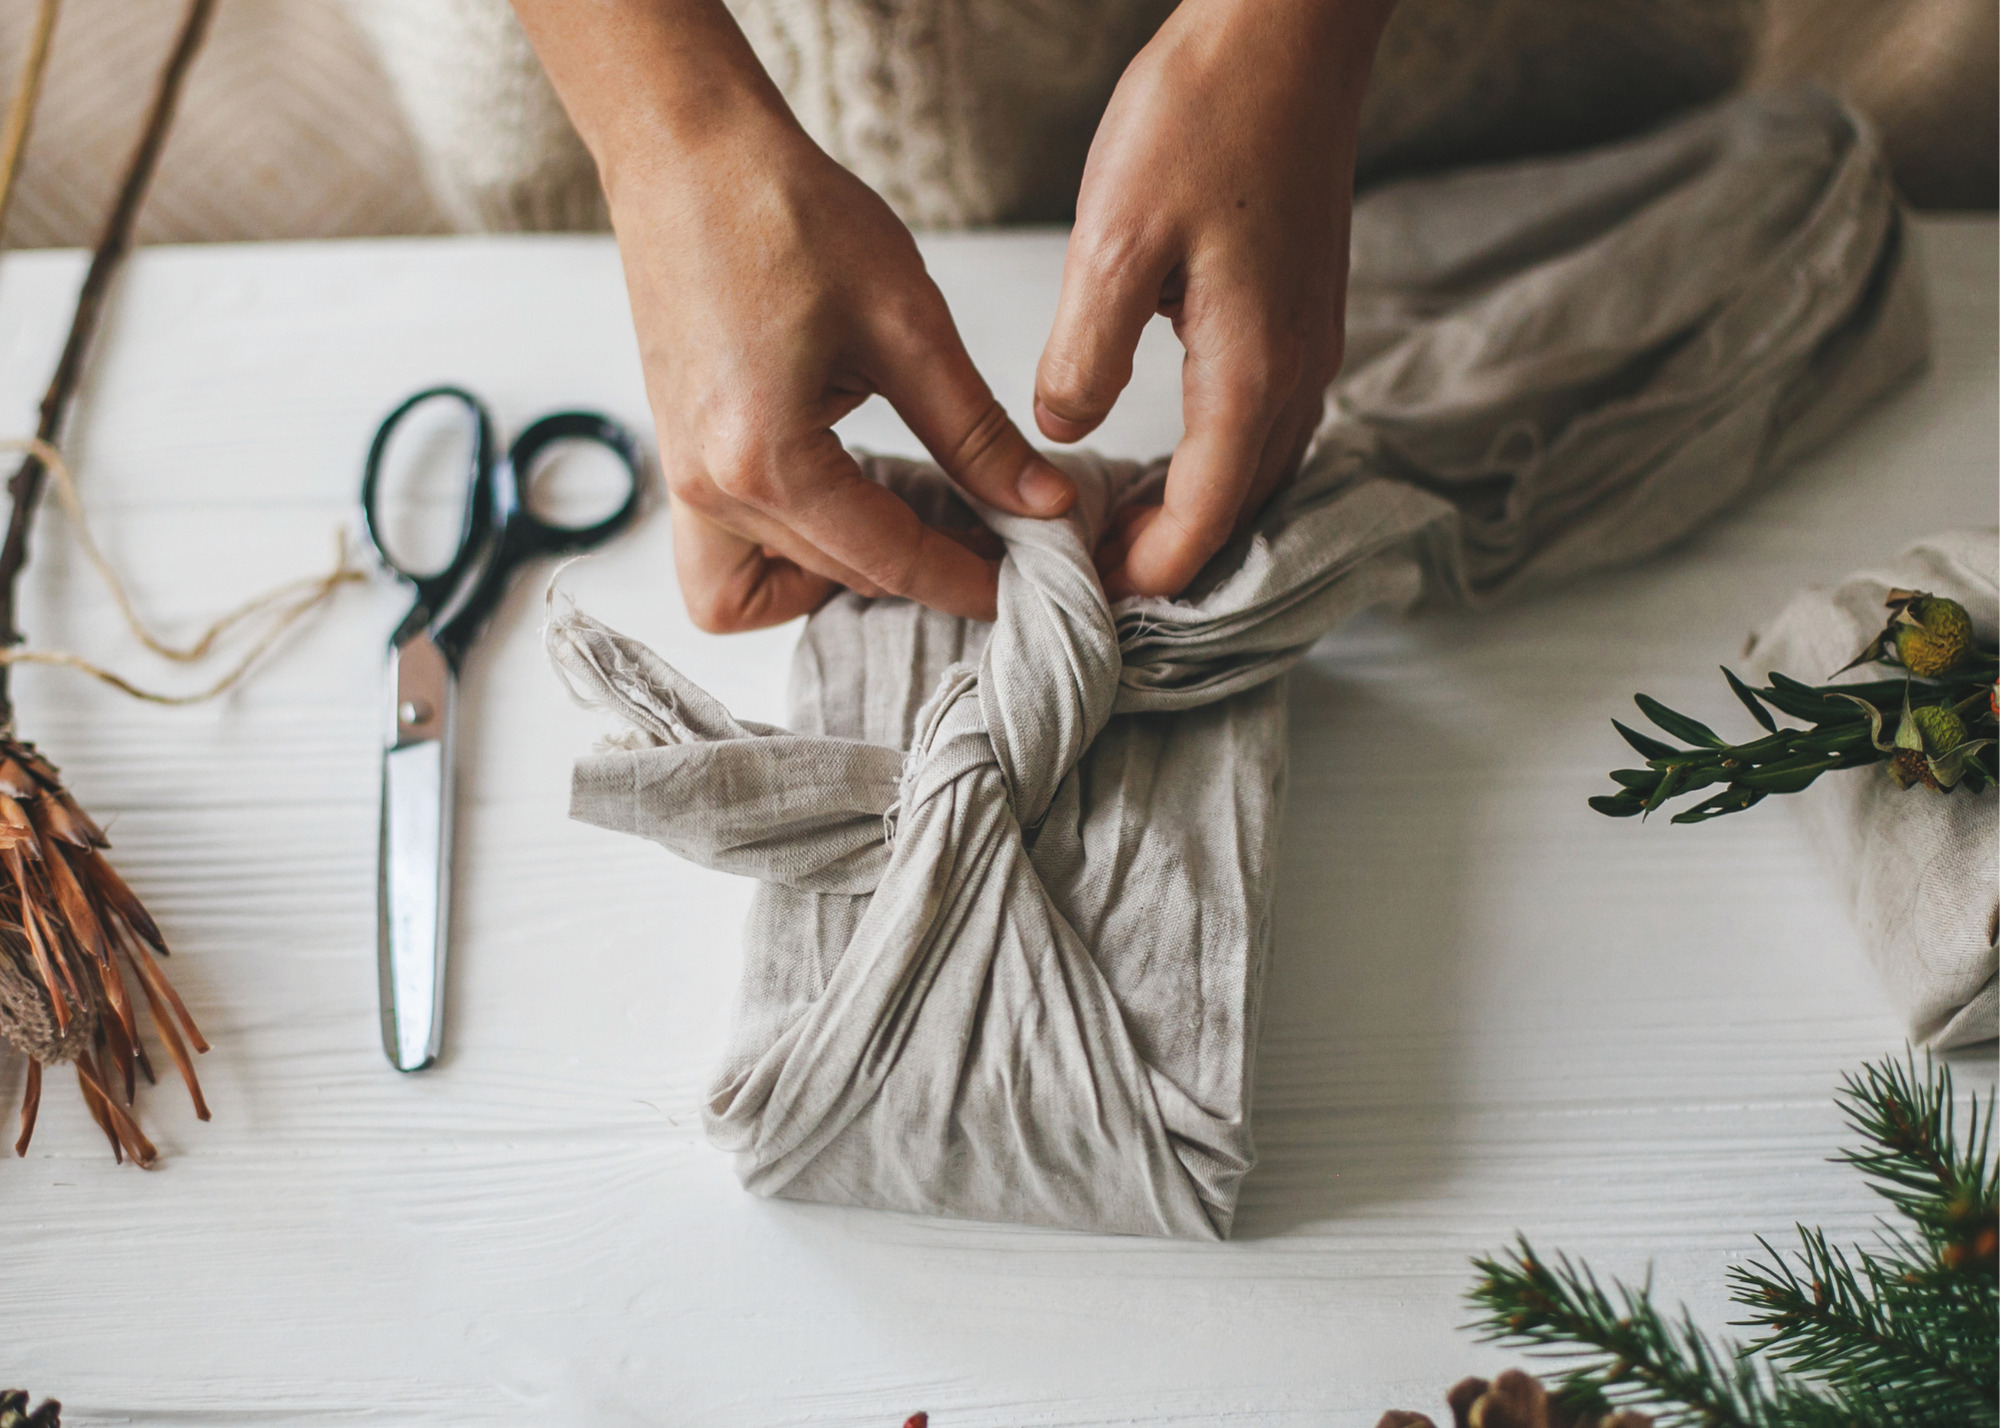 Learn how to wrap presents using fabric Furoshiki cloths